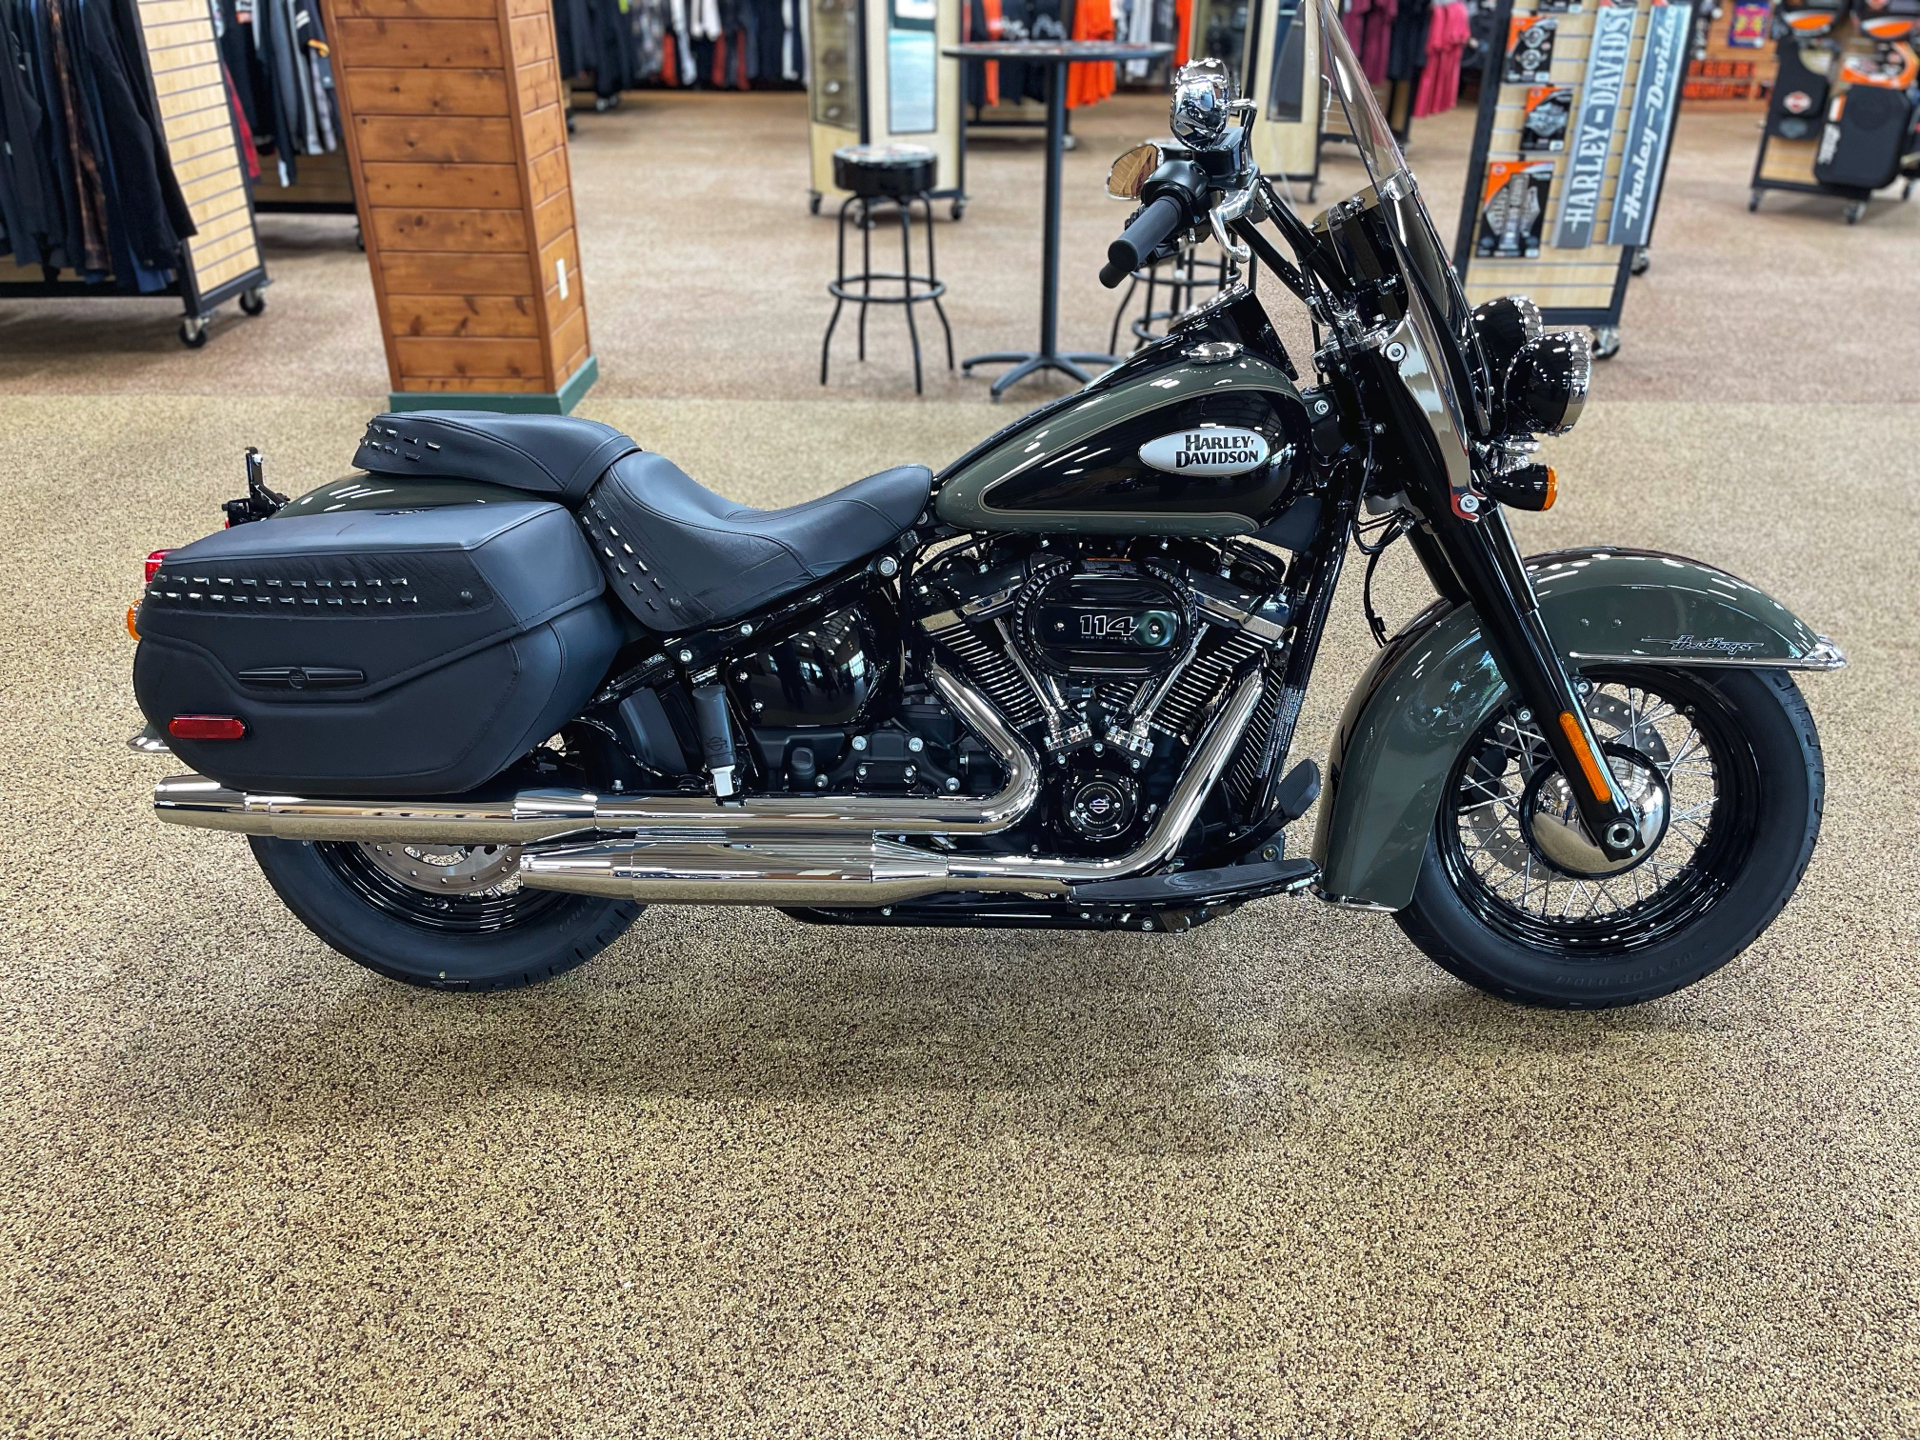 New 2021 Harley Davidson Heritage Classic 114 Deadwood Green Vivid Black Motorcycles In Sauk Rapids Mn 035431